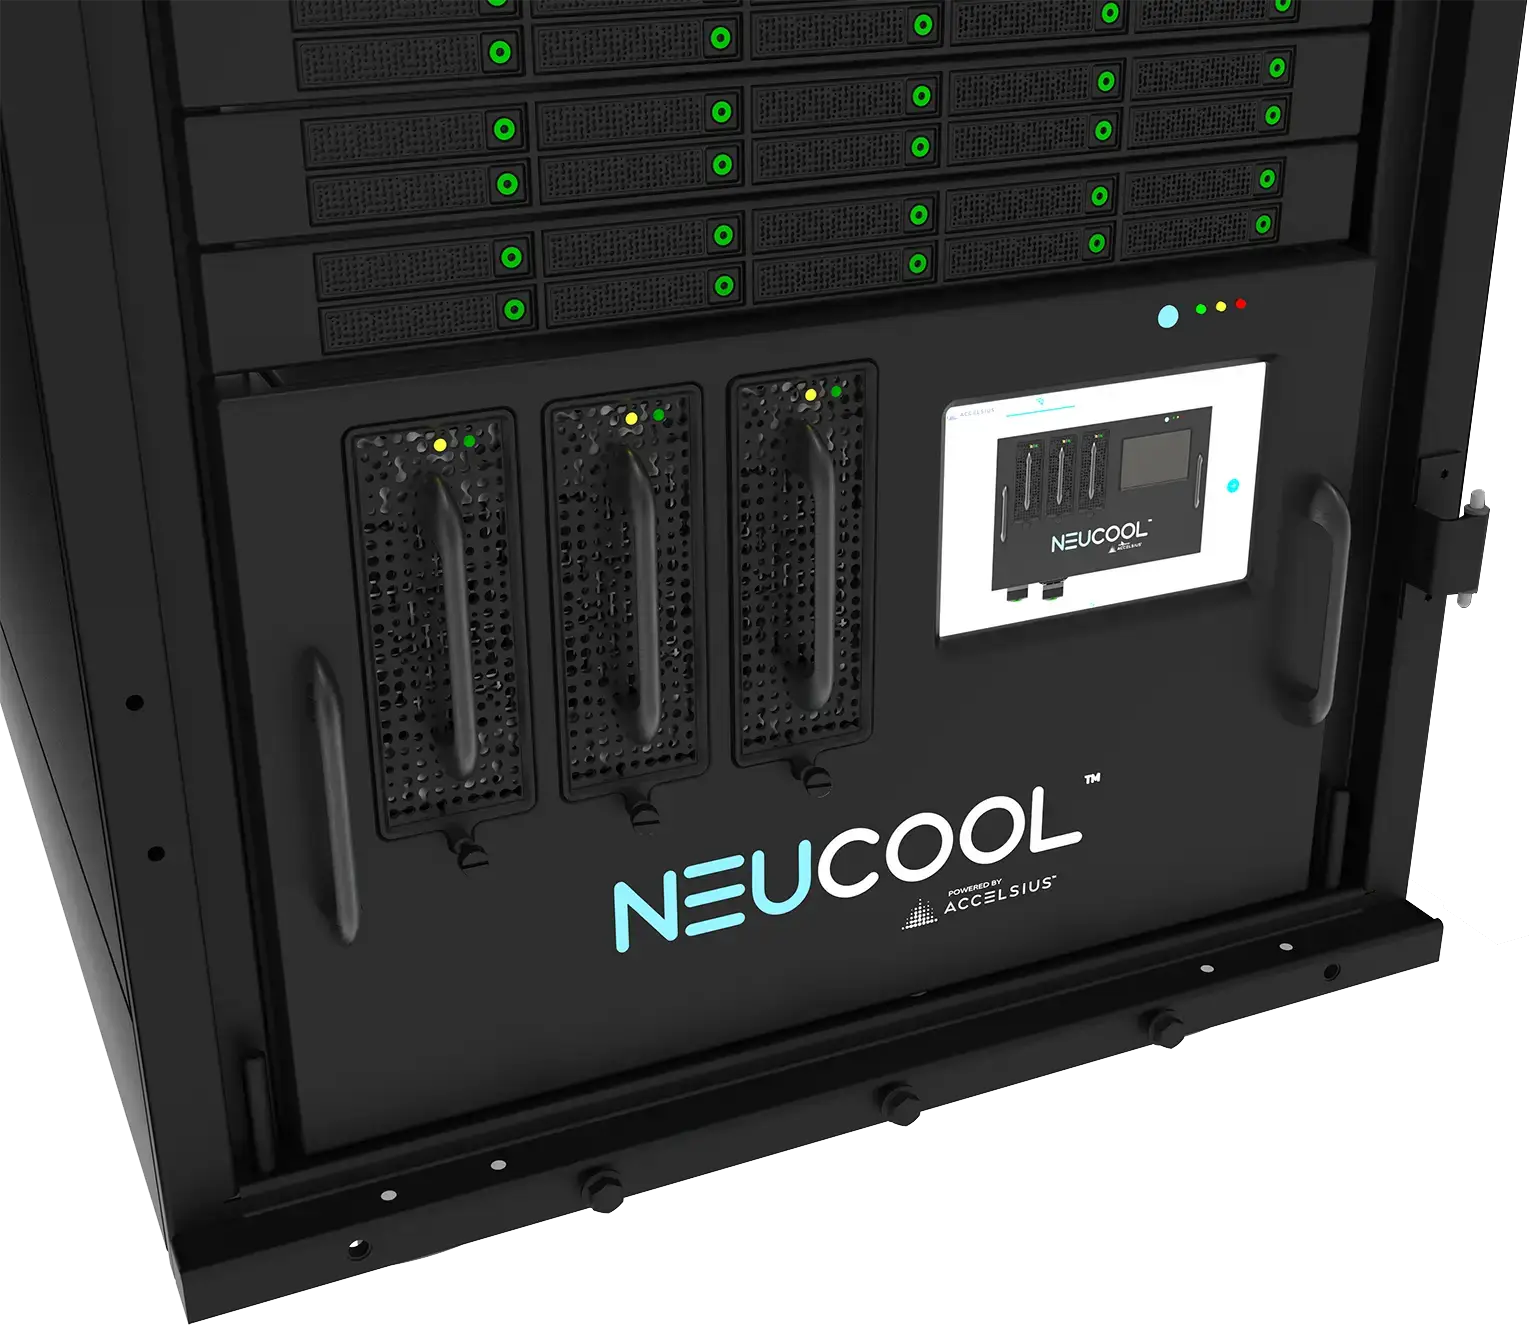 NeuCool Software Management System